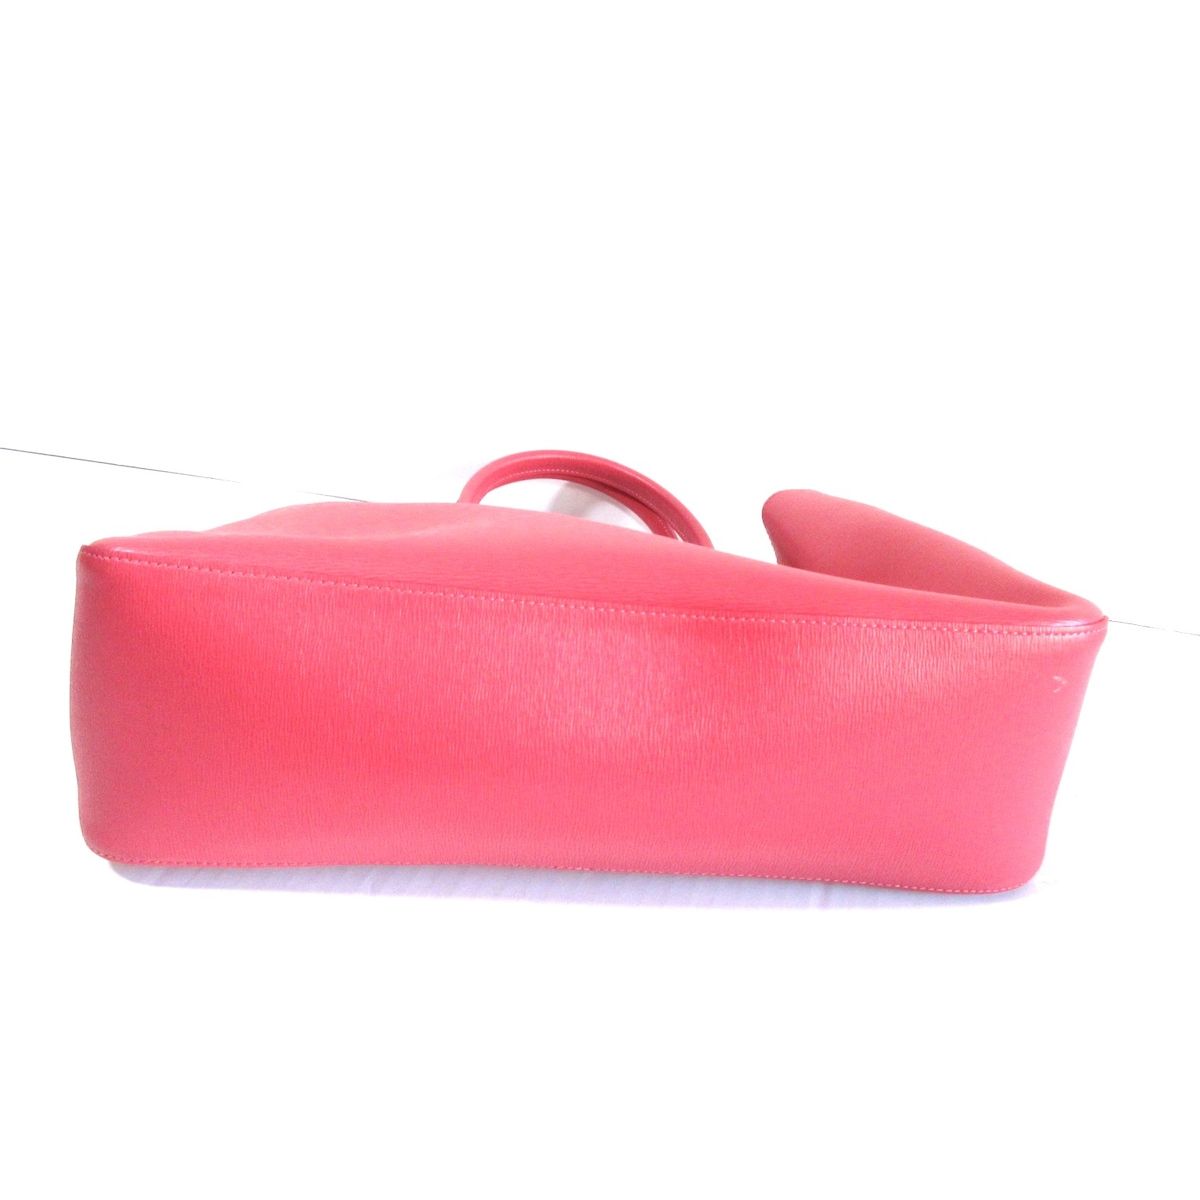 LONGCHAMP(ロンシャン) トートバッグ美品 ロゾ ピンク レザー - メルカリ